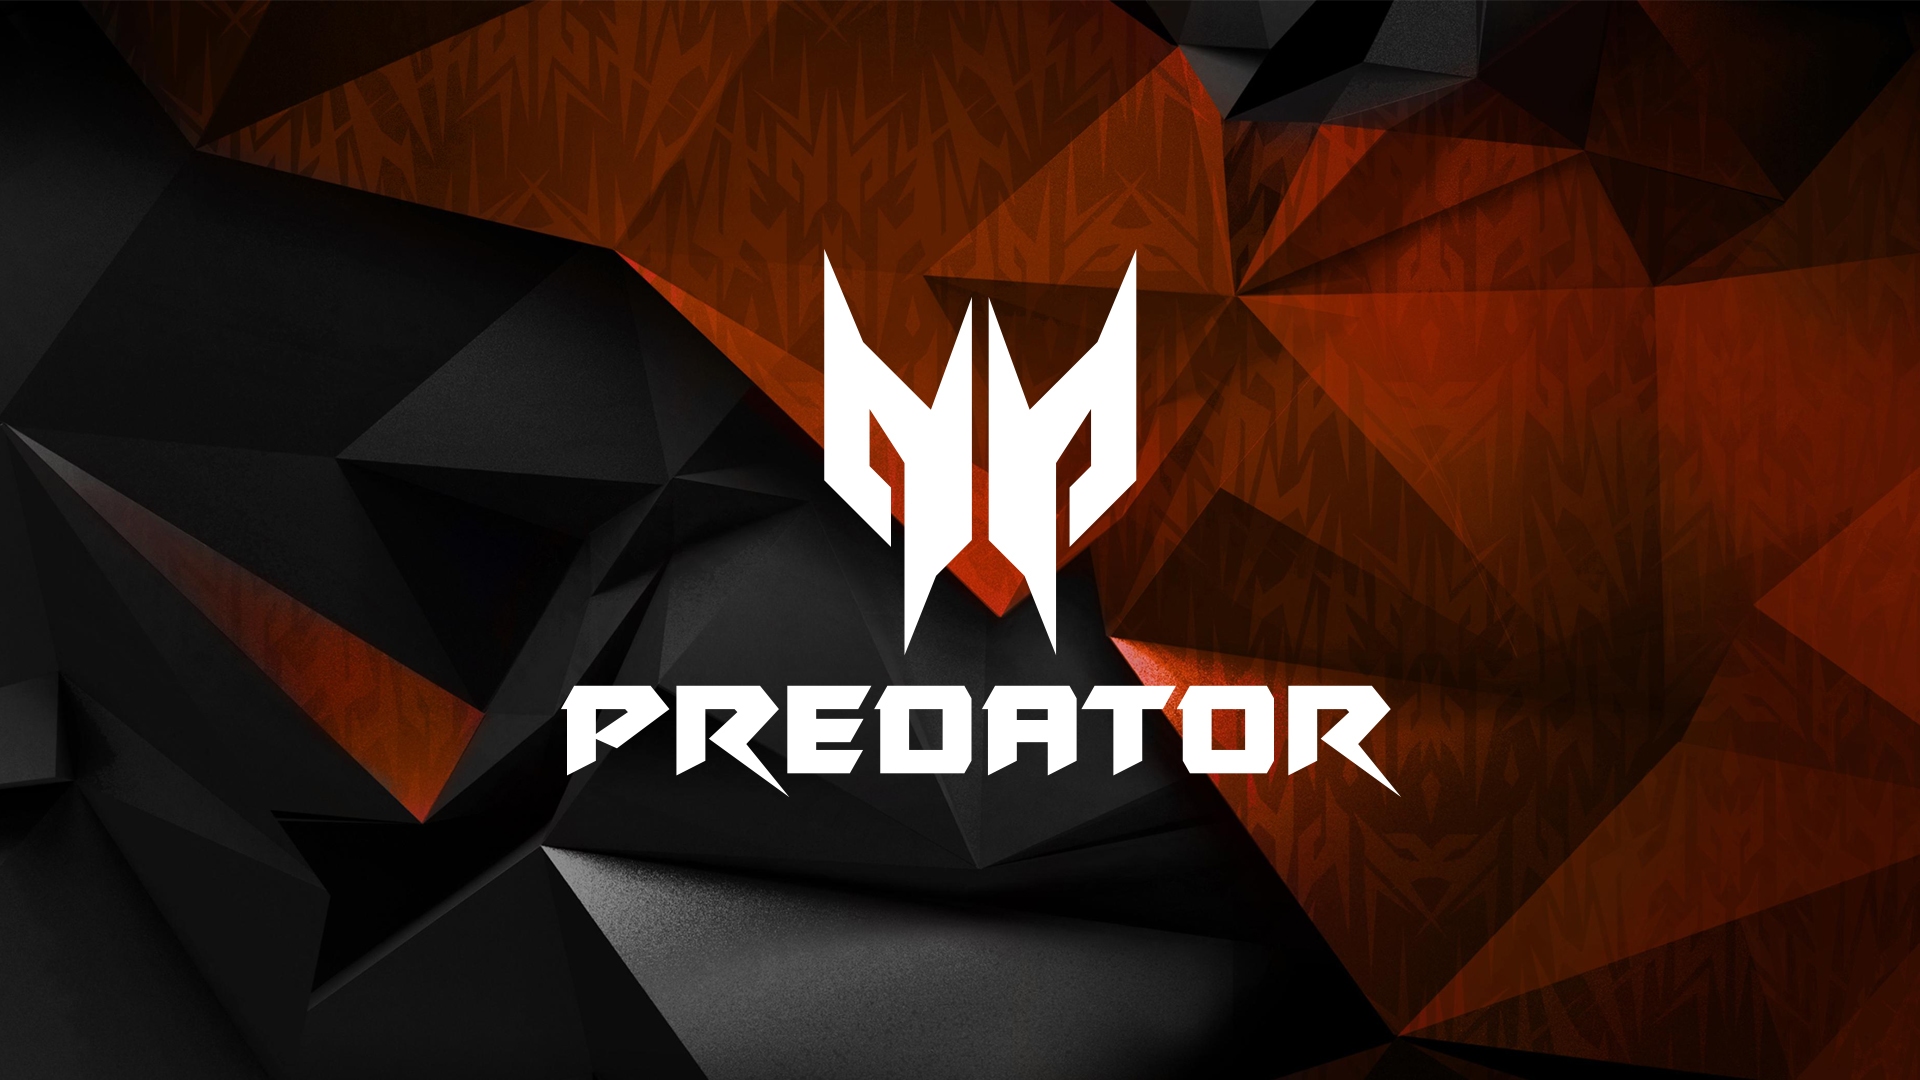 acer predator wallpaper,logo,orange,font,graphic design,graphics